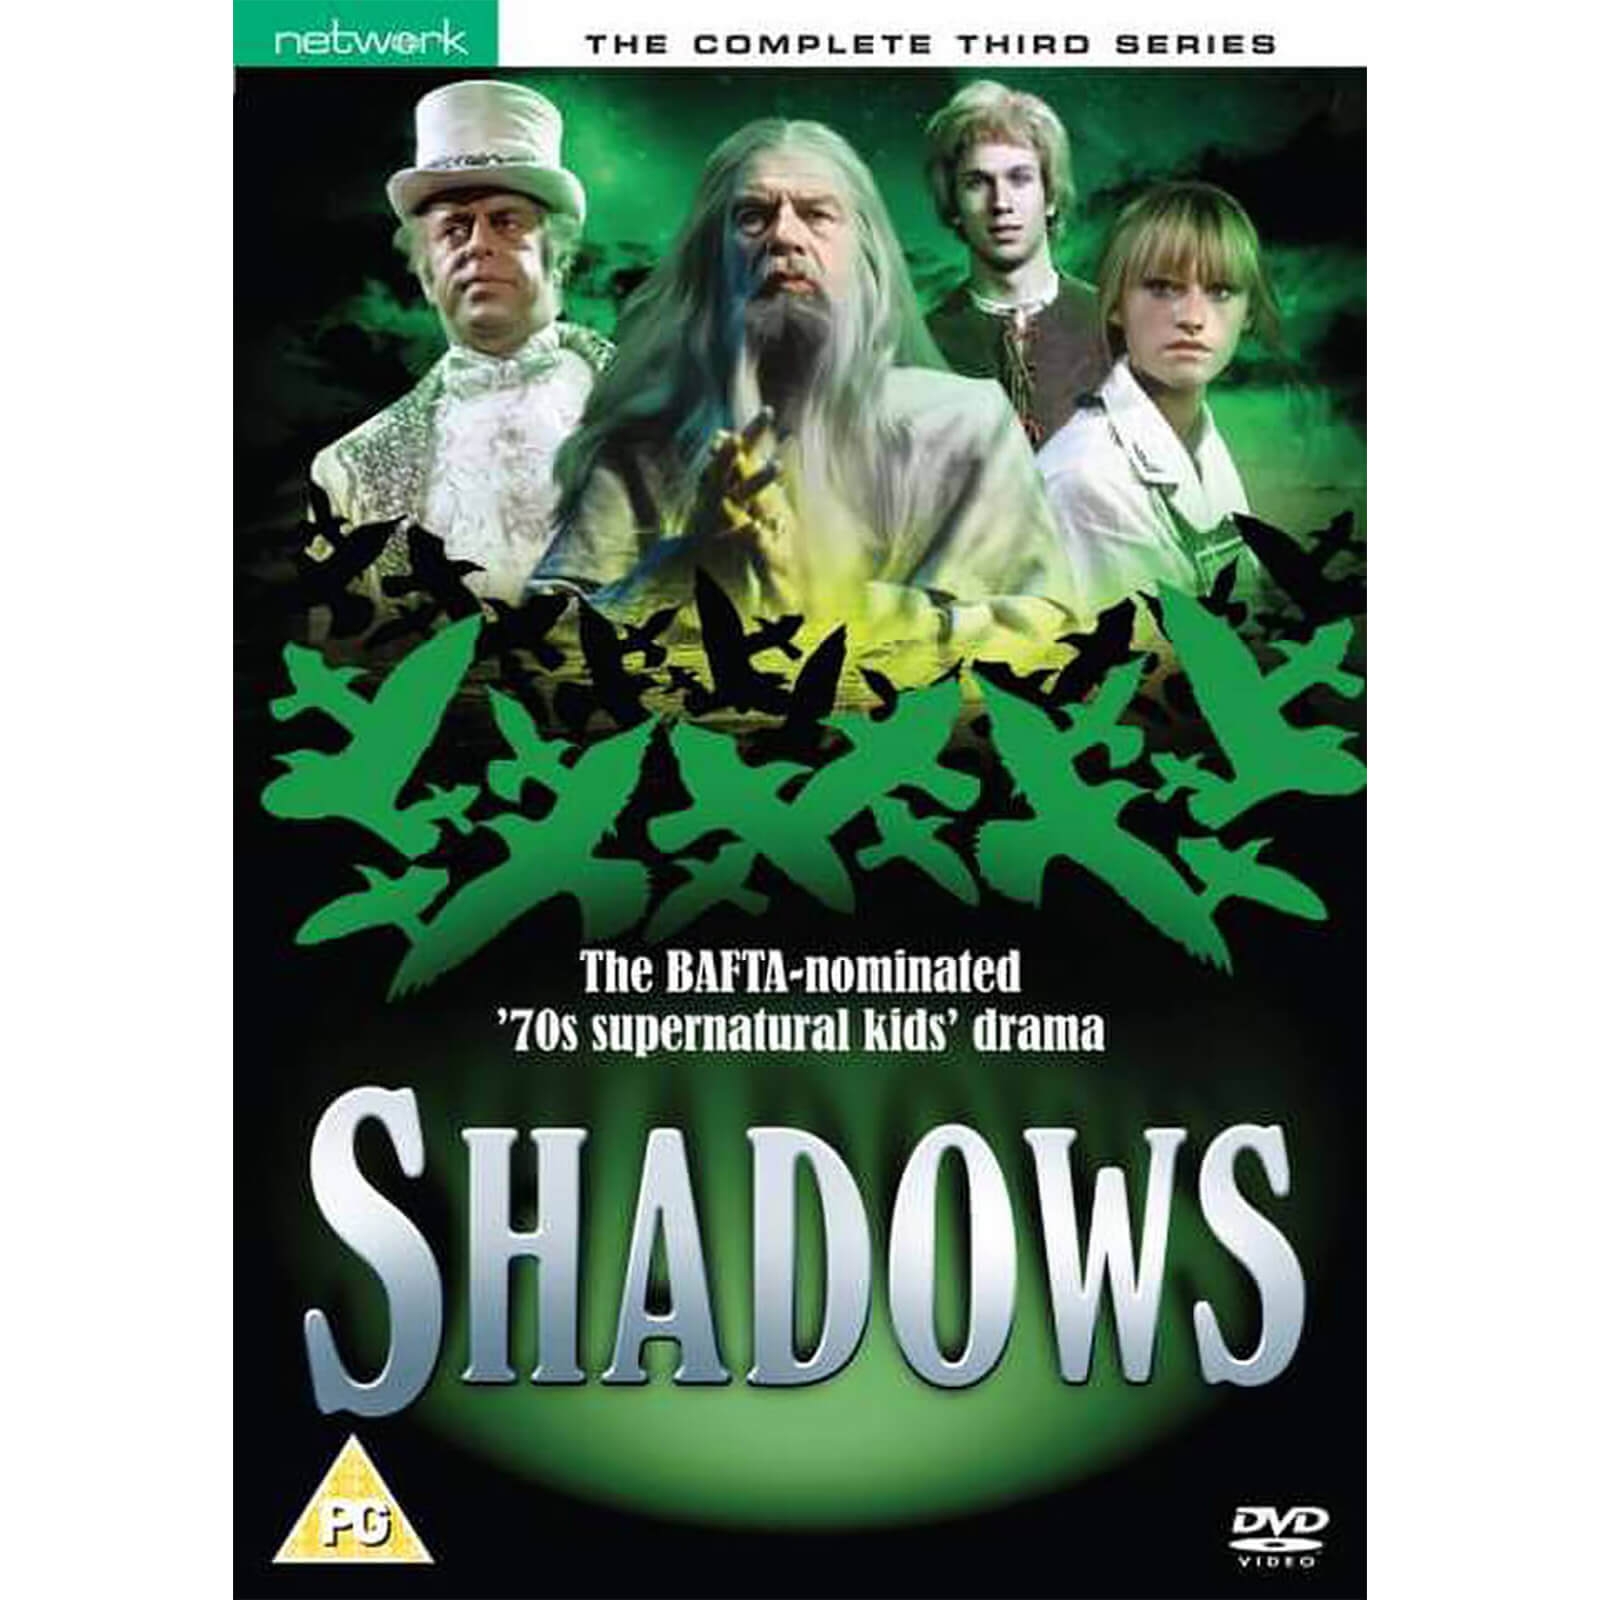 Coronation Street The Nineties (2011) Philip Middlemass 10 Discs Dvd Region 2